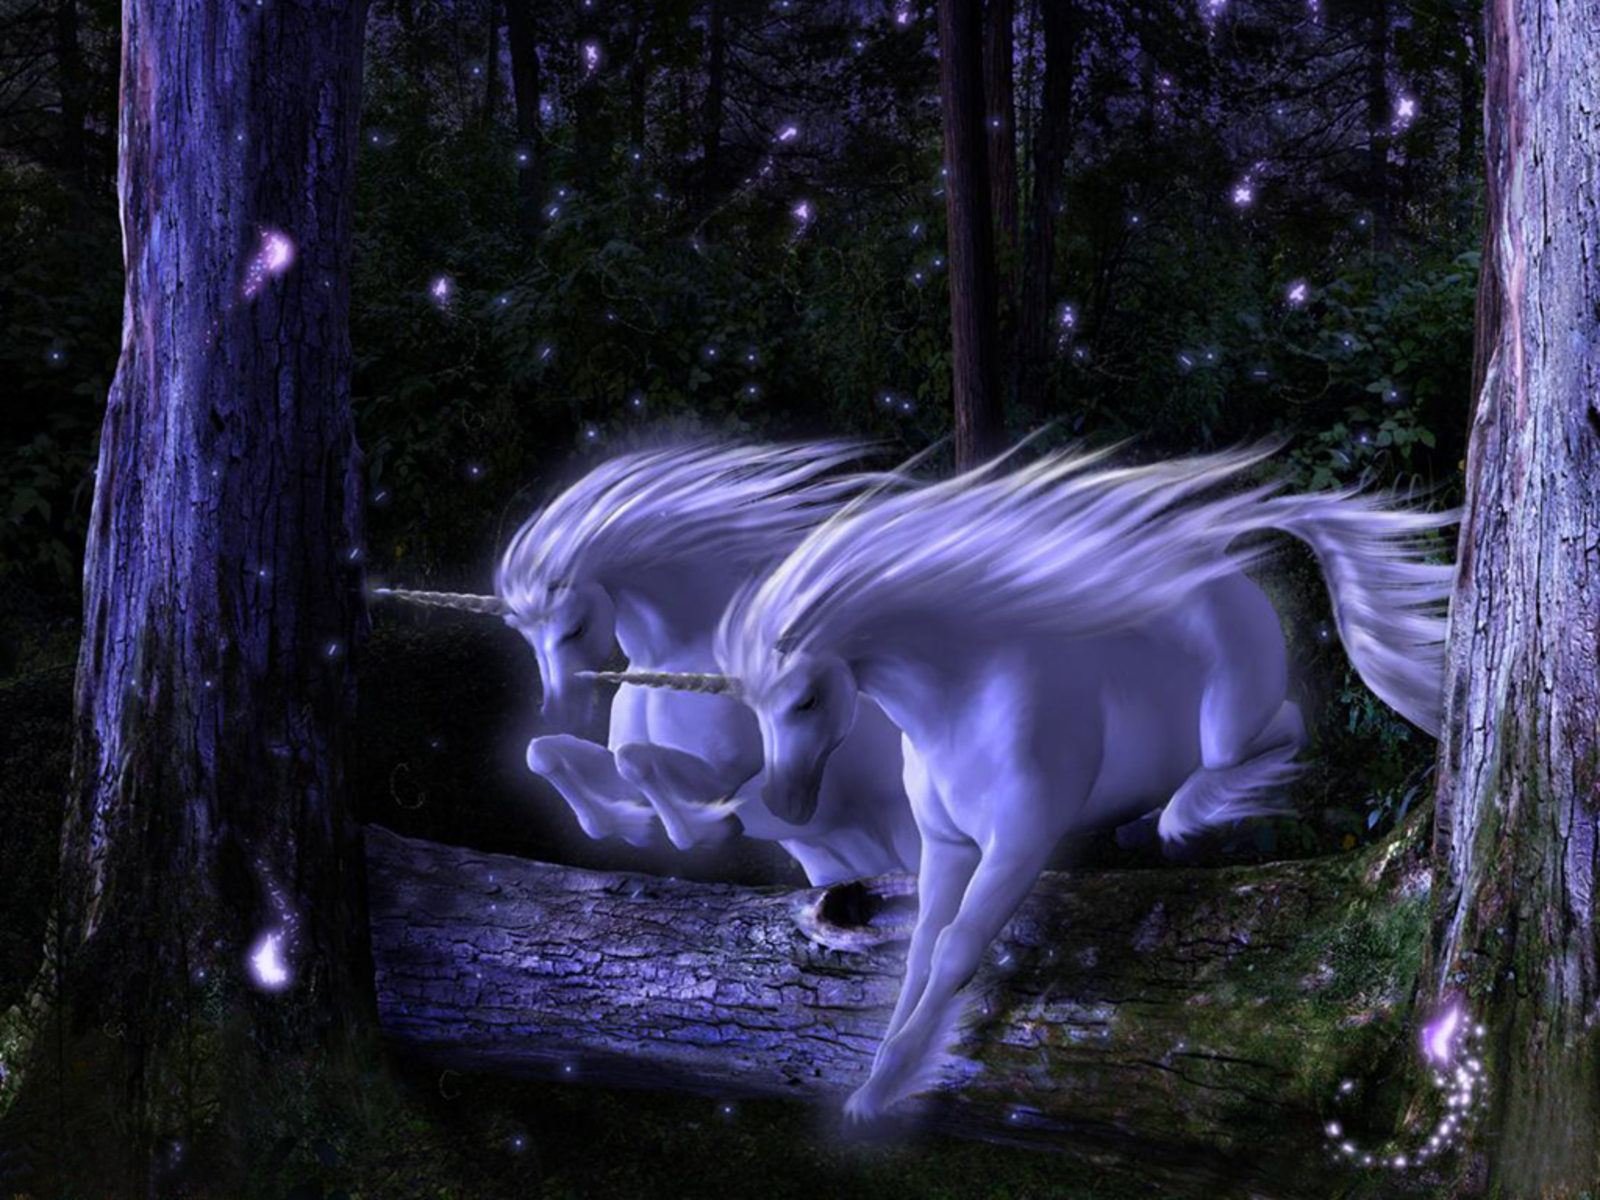 Purple Unicorns - a vivid desktop wallpaper with majestic mythical creatures.